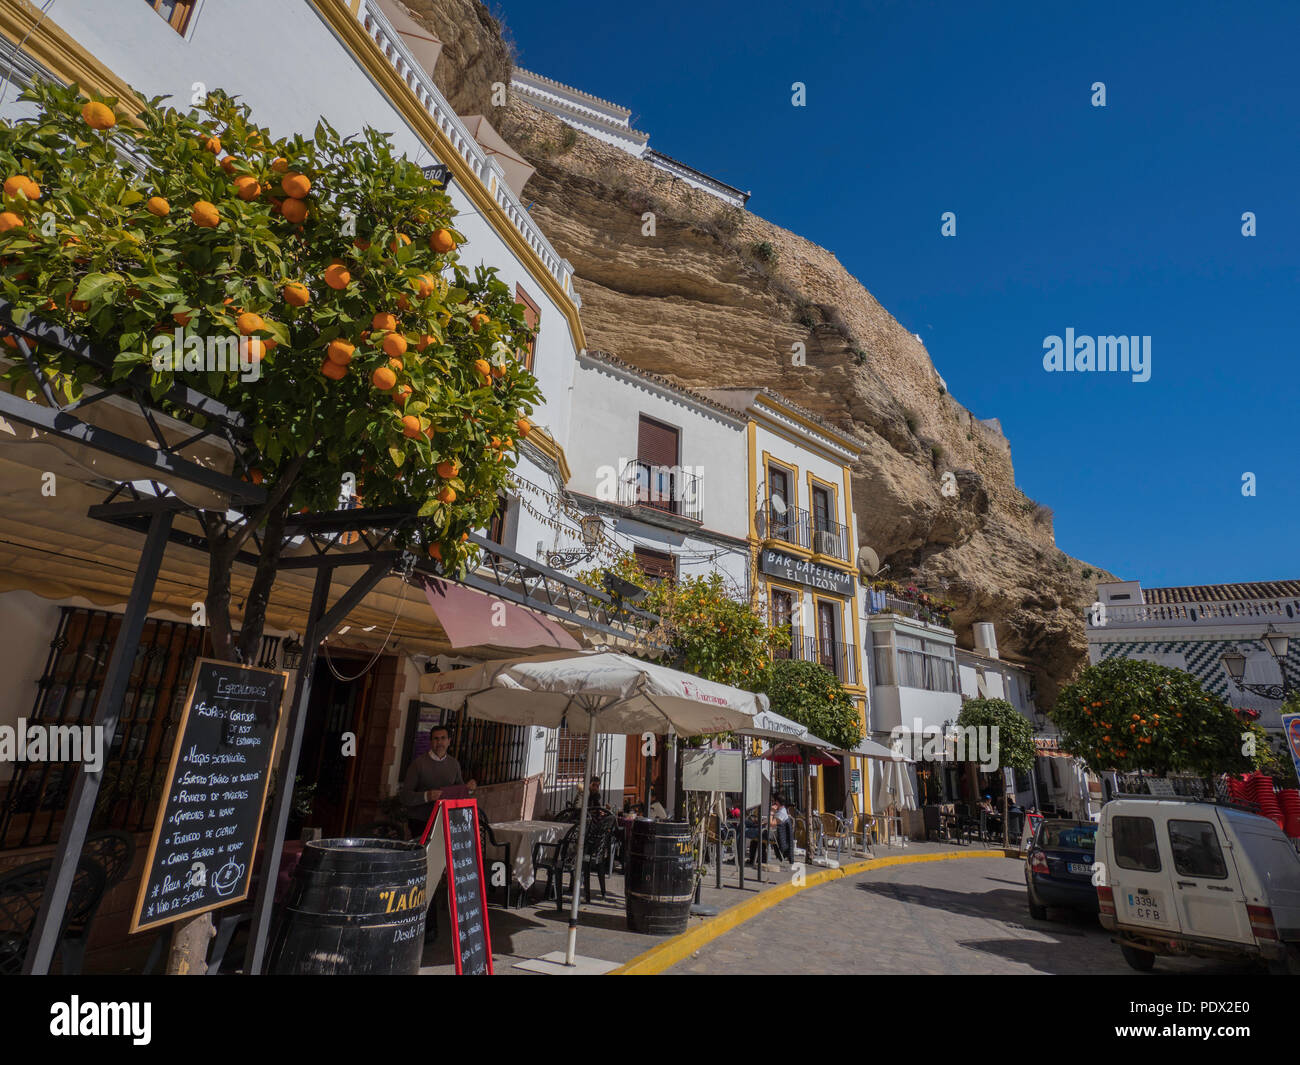 Street view of the beautiful white town in Sentenil de las Bodegas, Spain Stock Photo